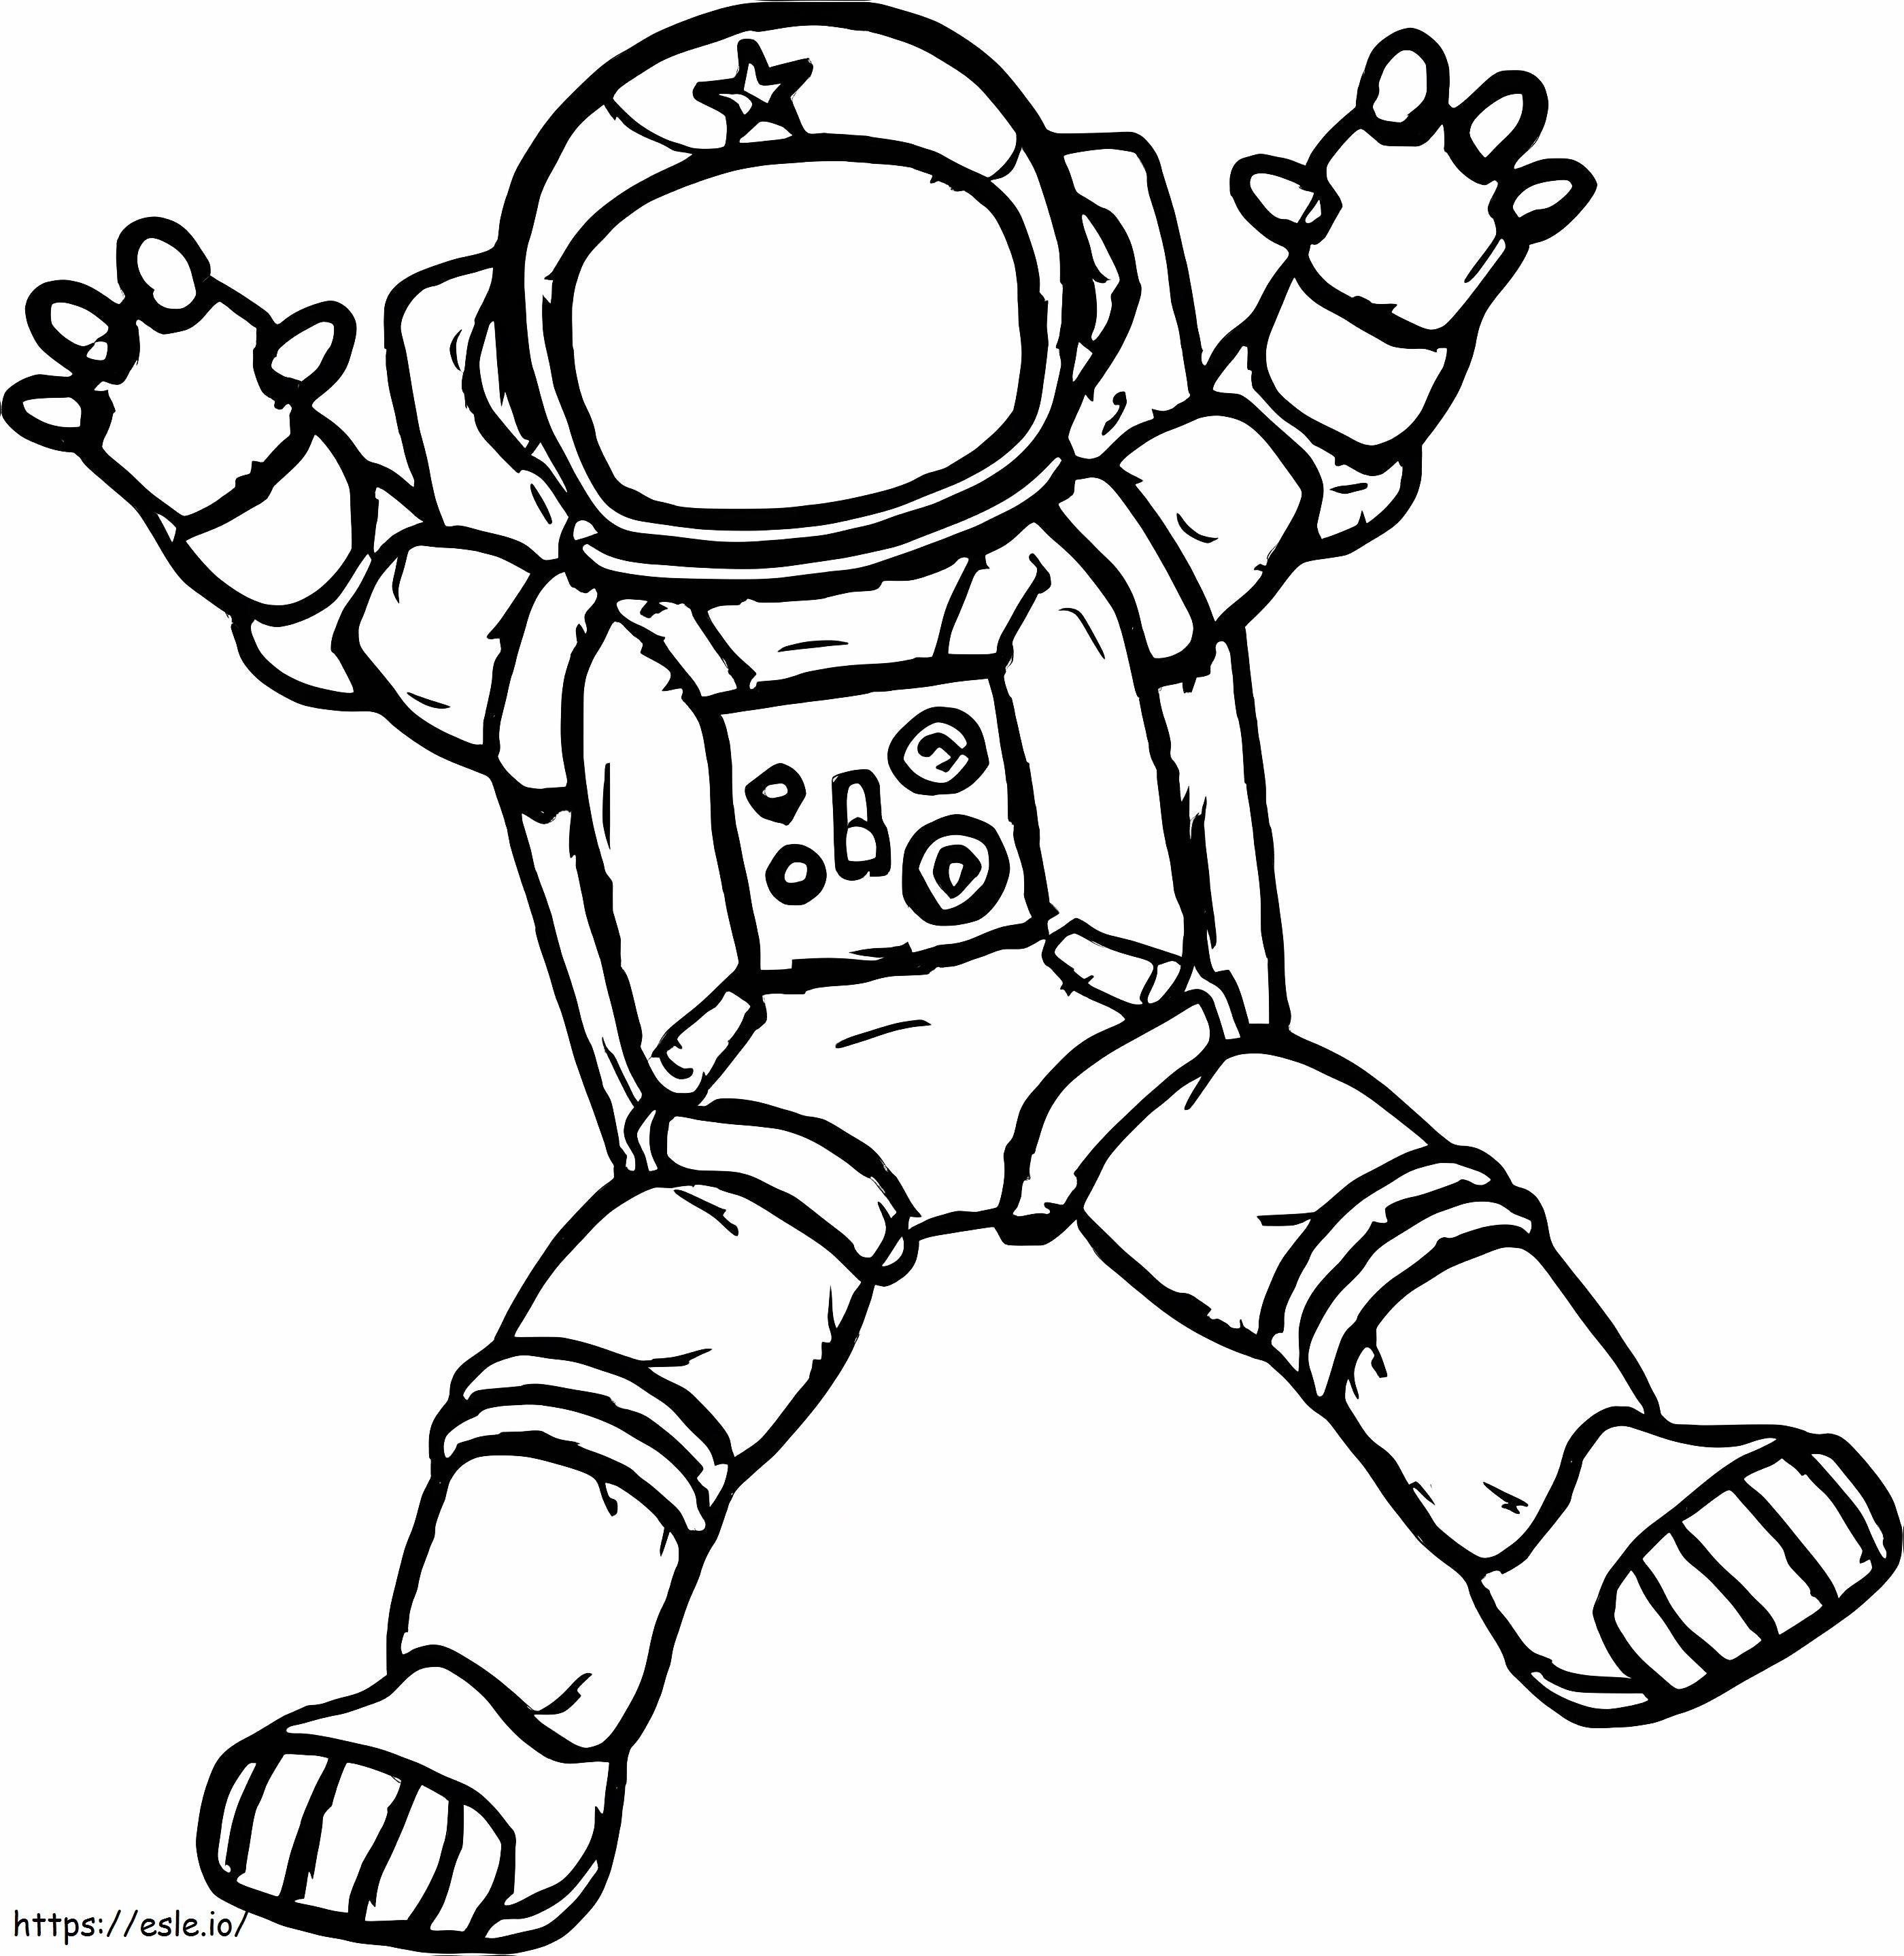 Coloriage Astronaute gratuit à imprimer dessin